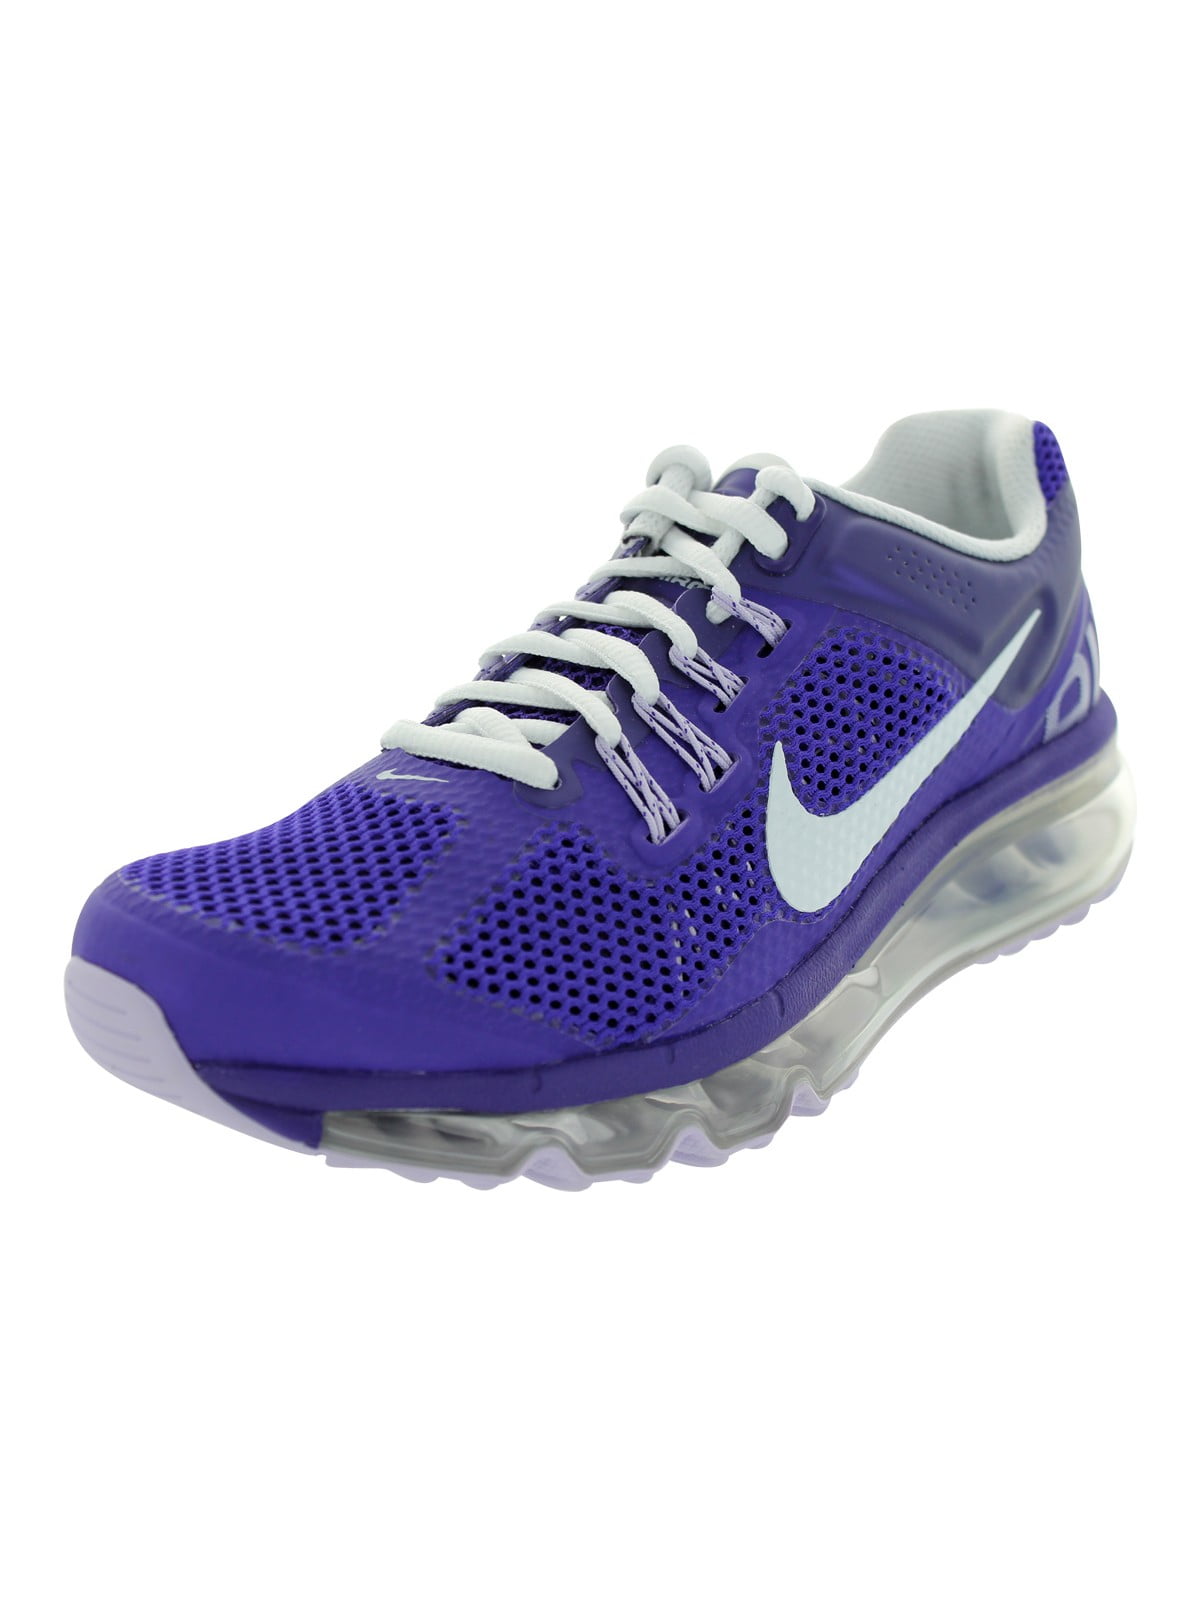 Nike Flex 2013 Run Women's Running Shoes Sneakers Teal Size 7  580440-300 | eBay